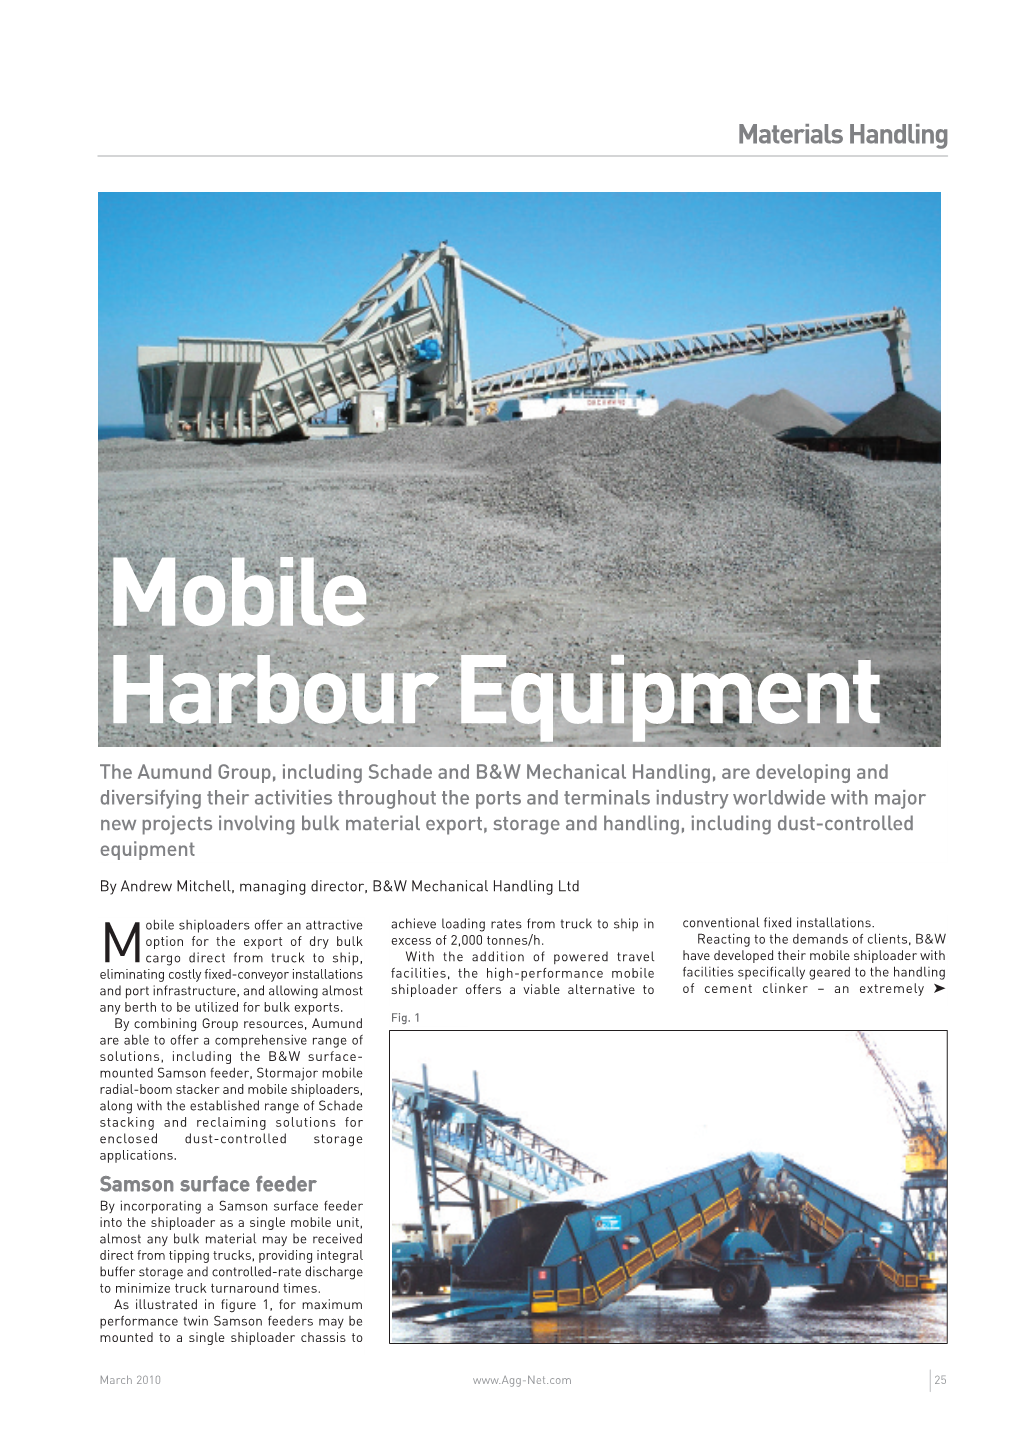 Mobile Harbour Equipment